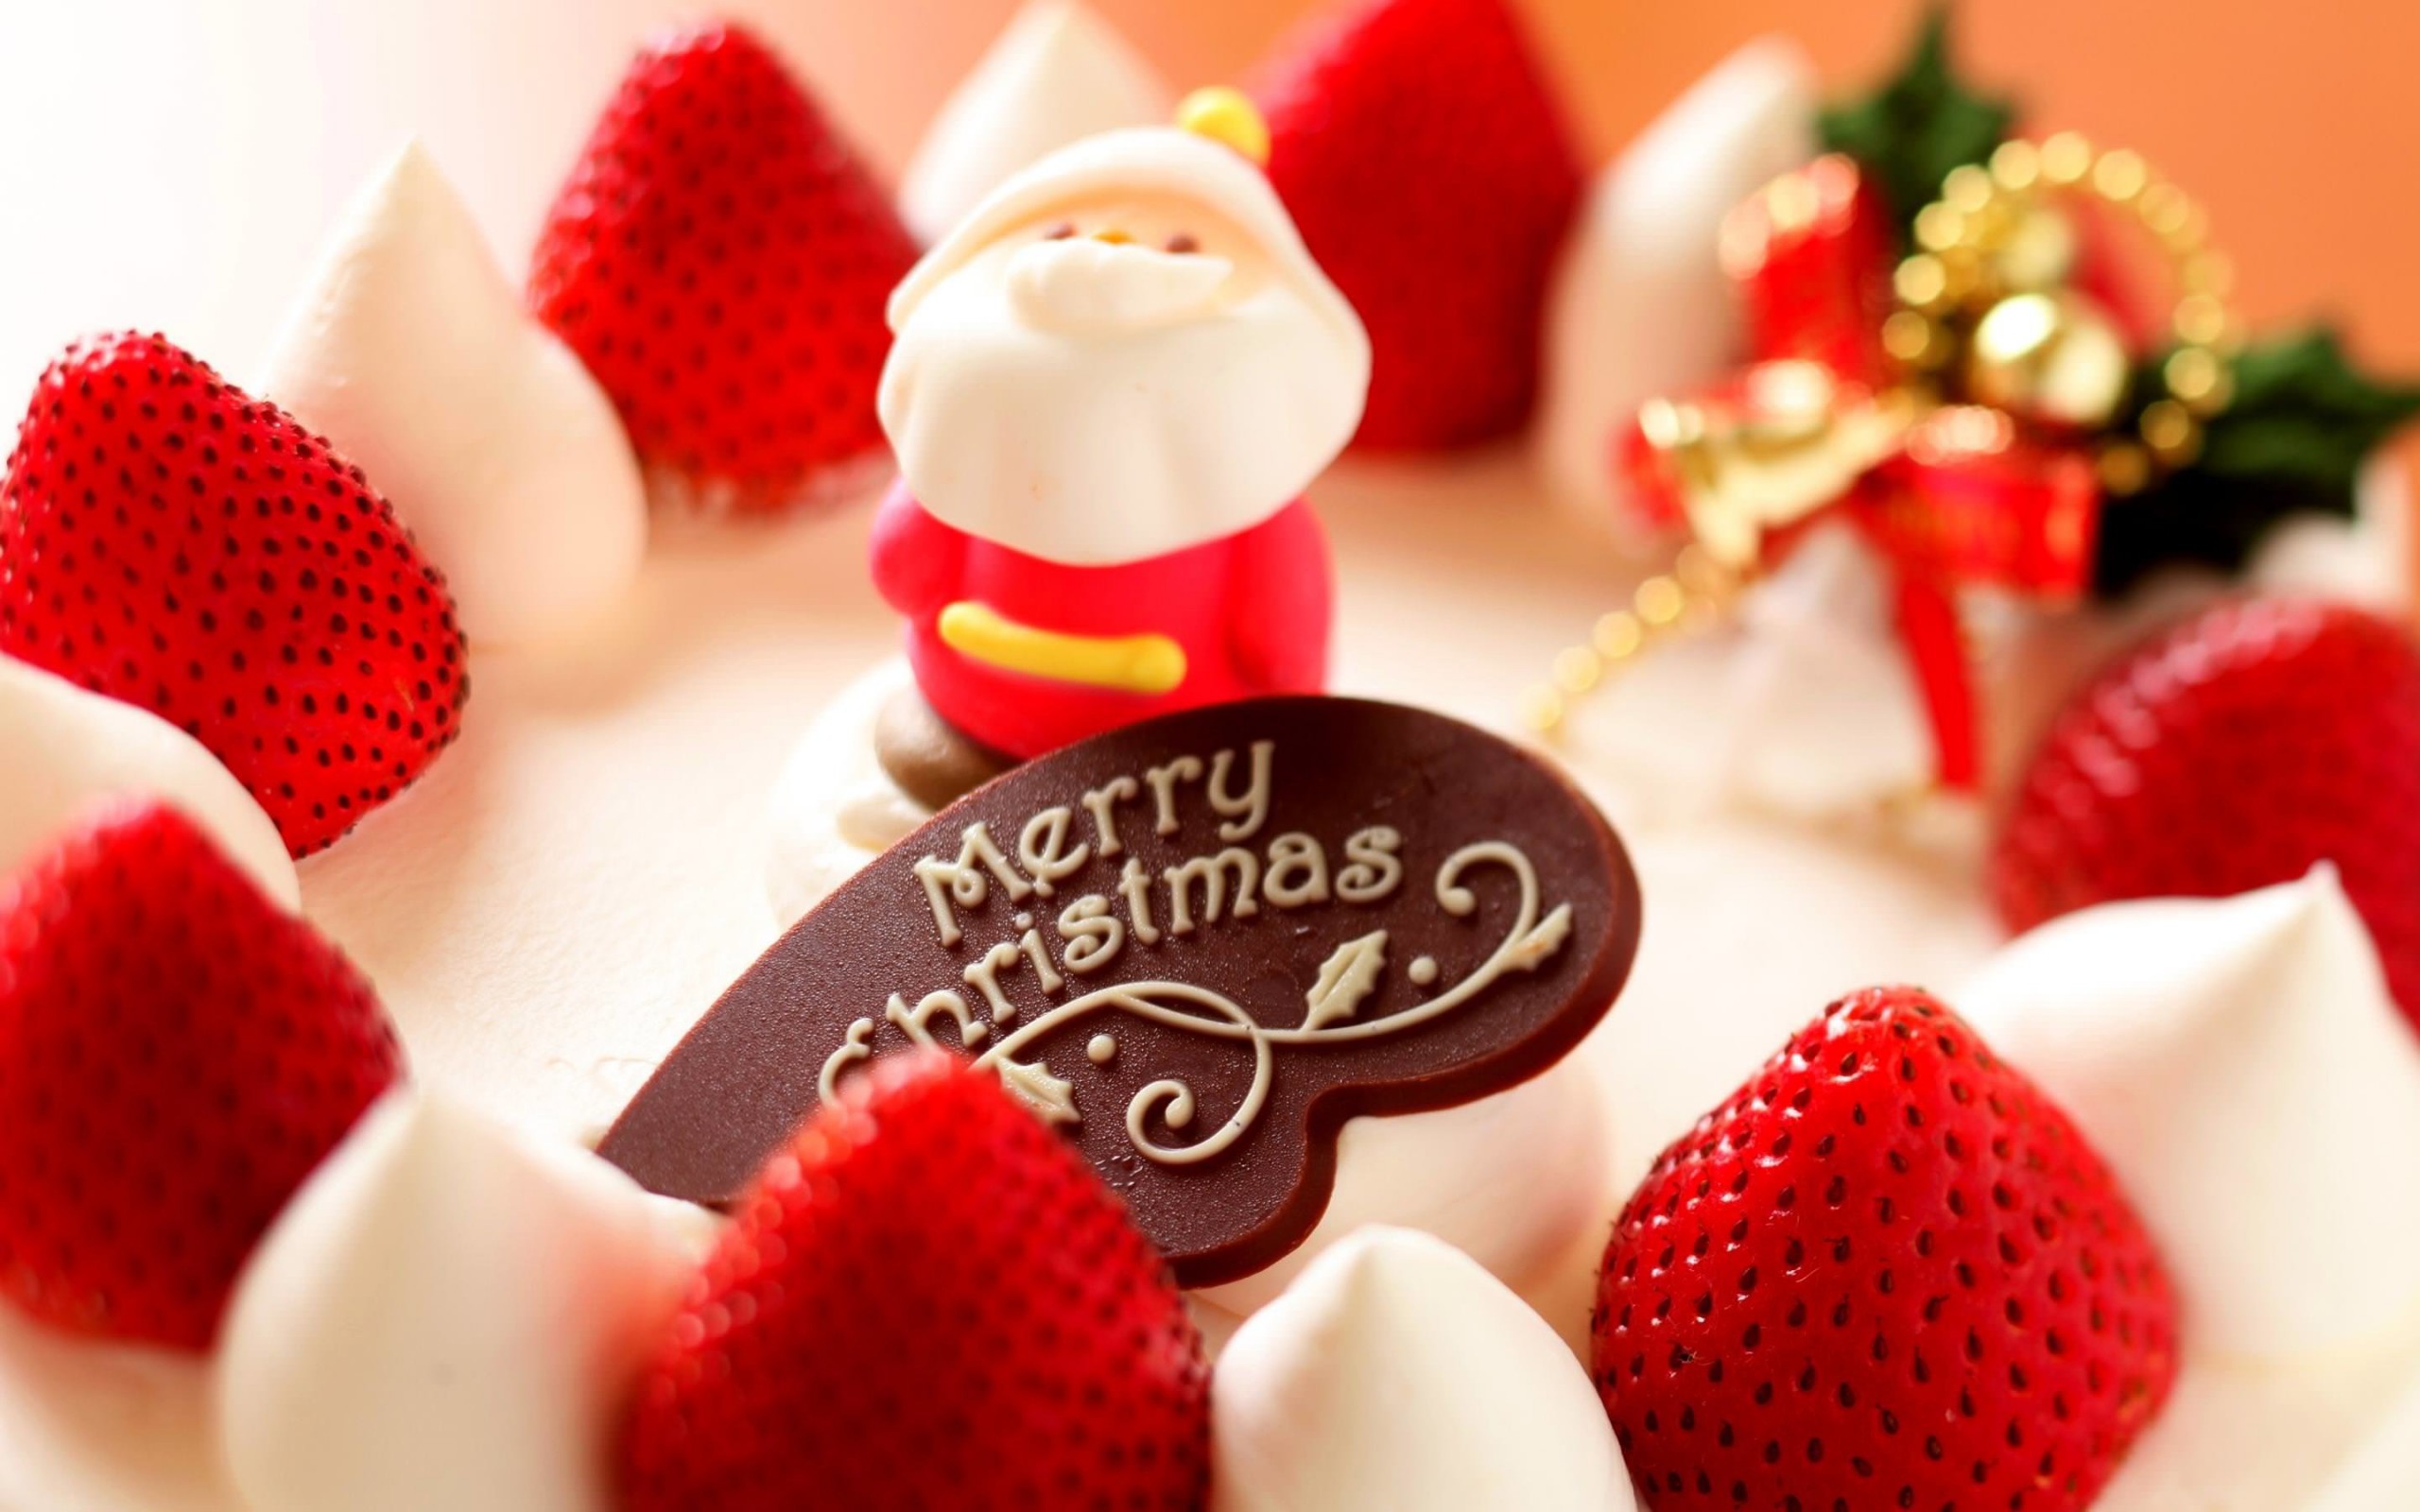 Merry Christmas Strawberry Dessert Wallpaper for Desktop 2560x1600